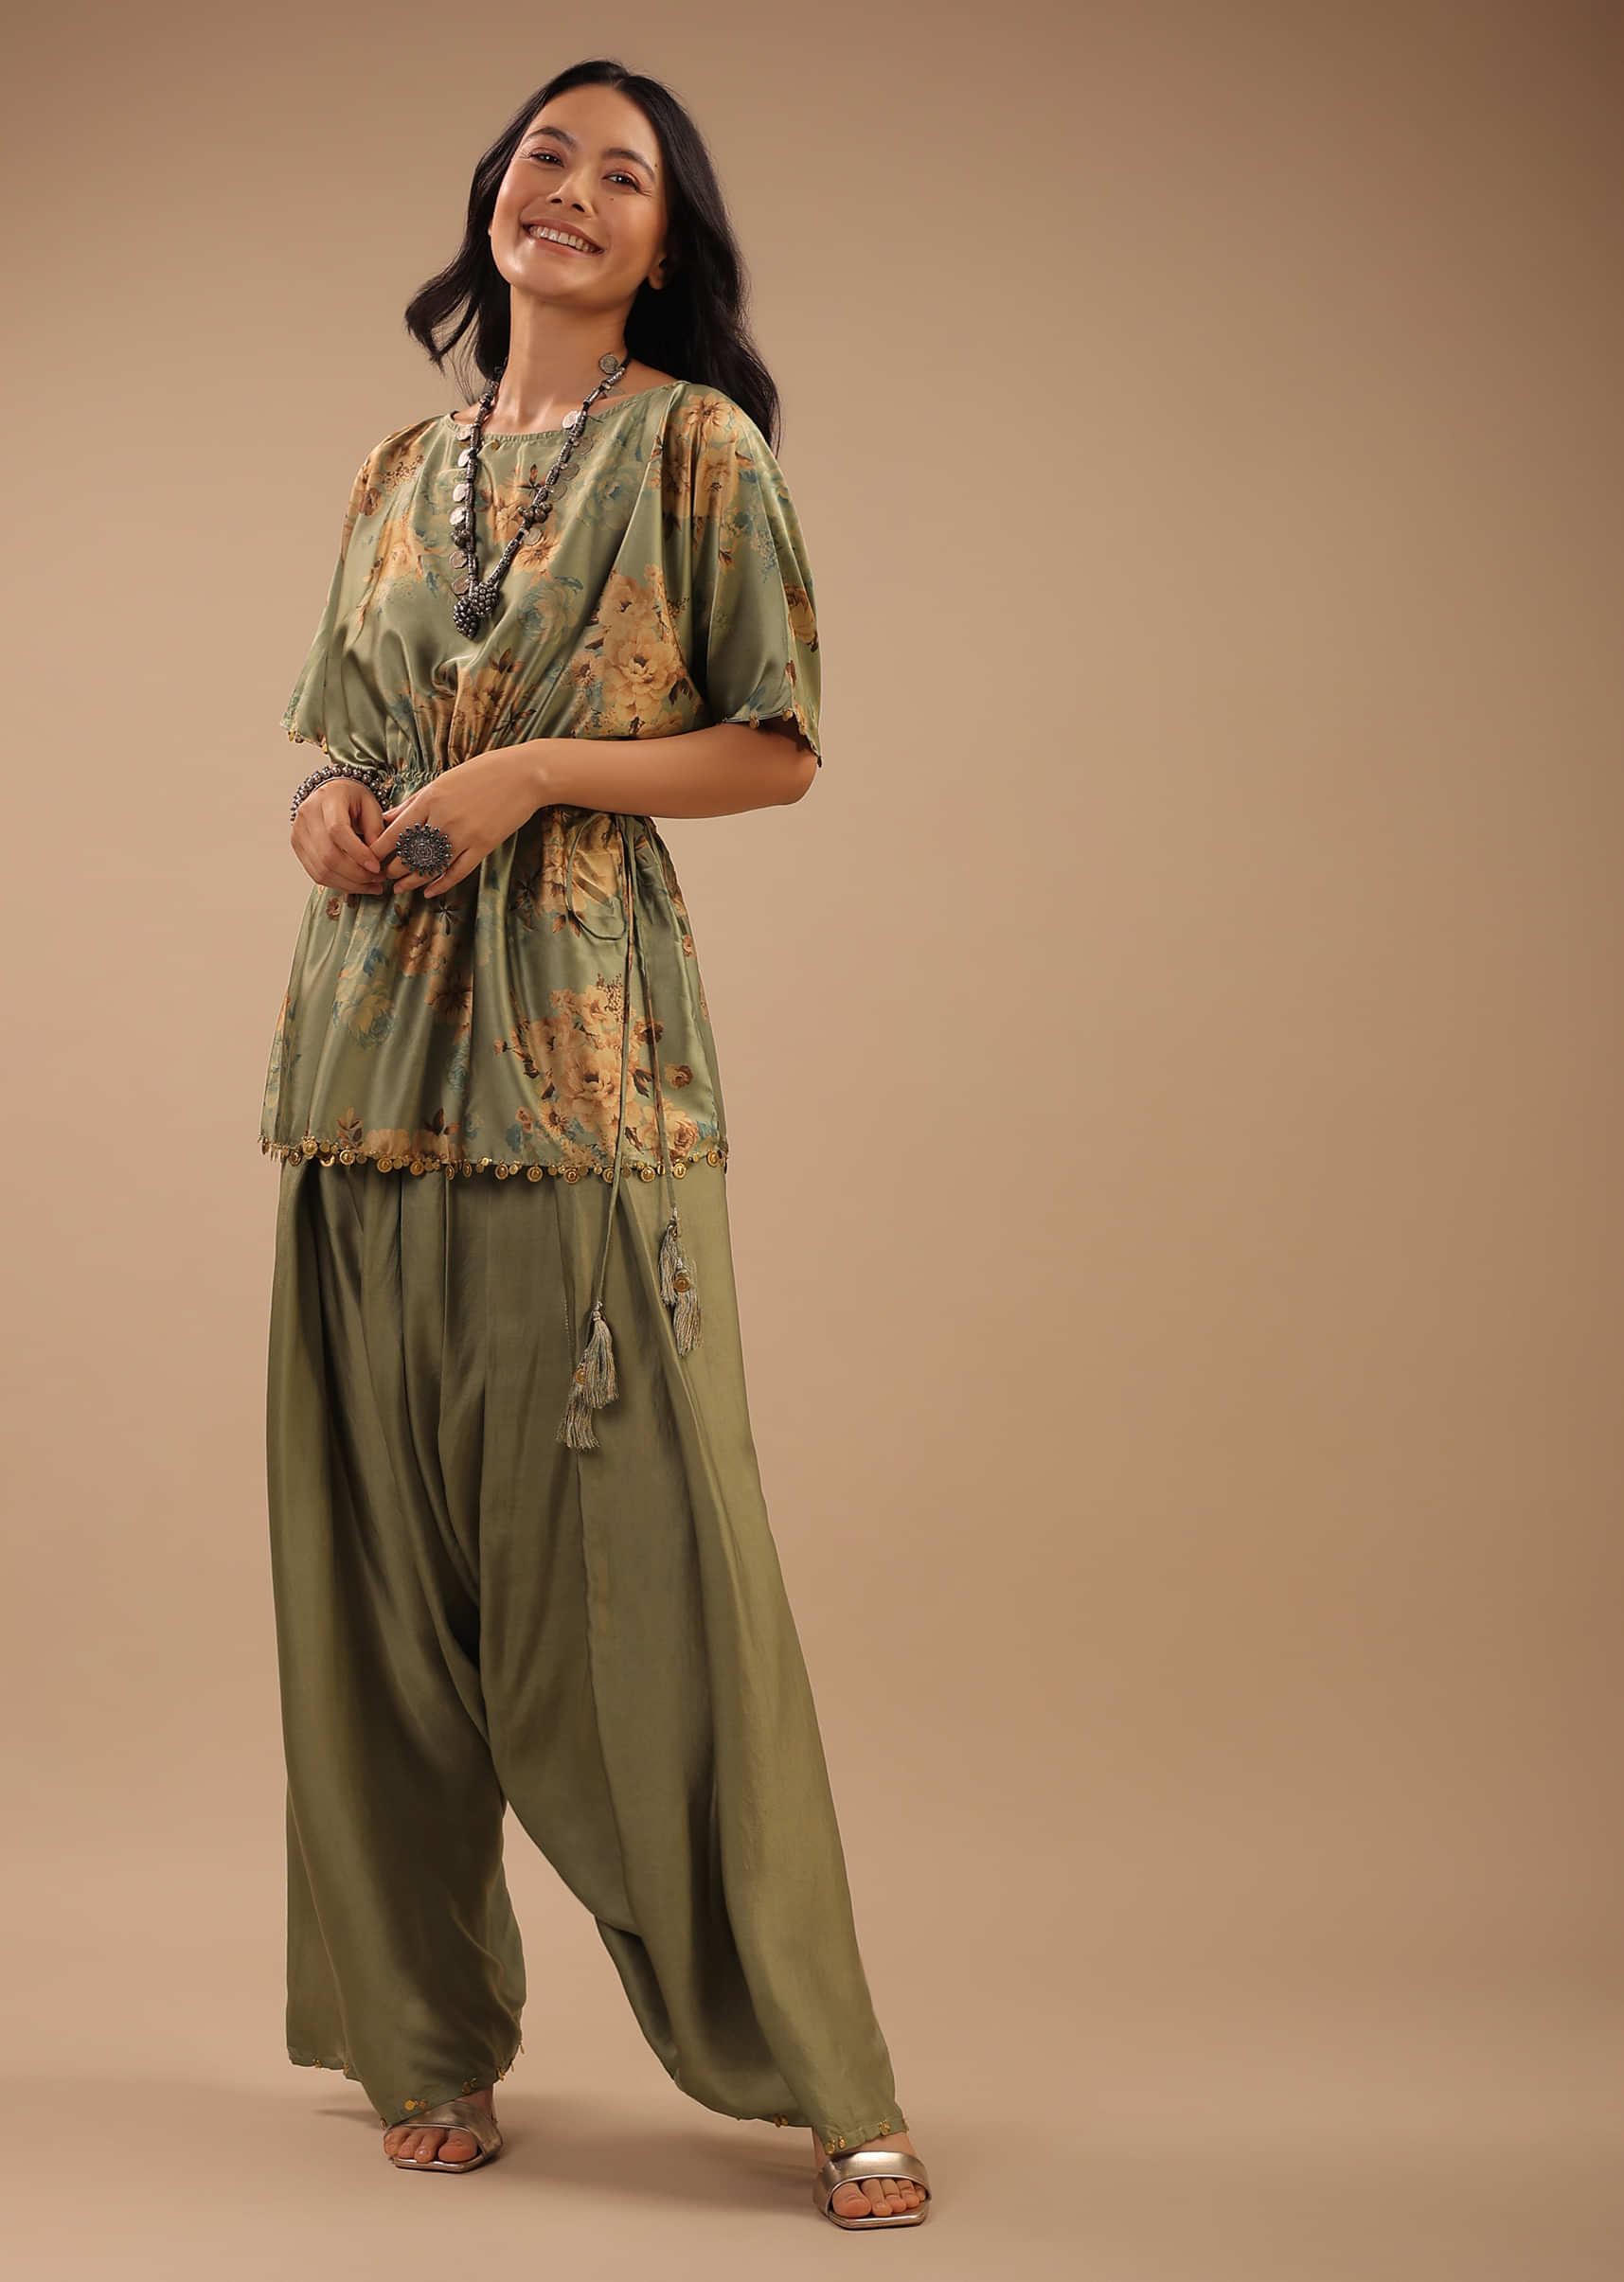 Tea Green Satin Peplum Top And Dhoti Pants With A Floral Print